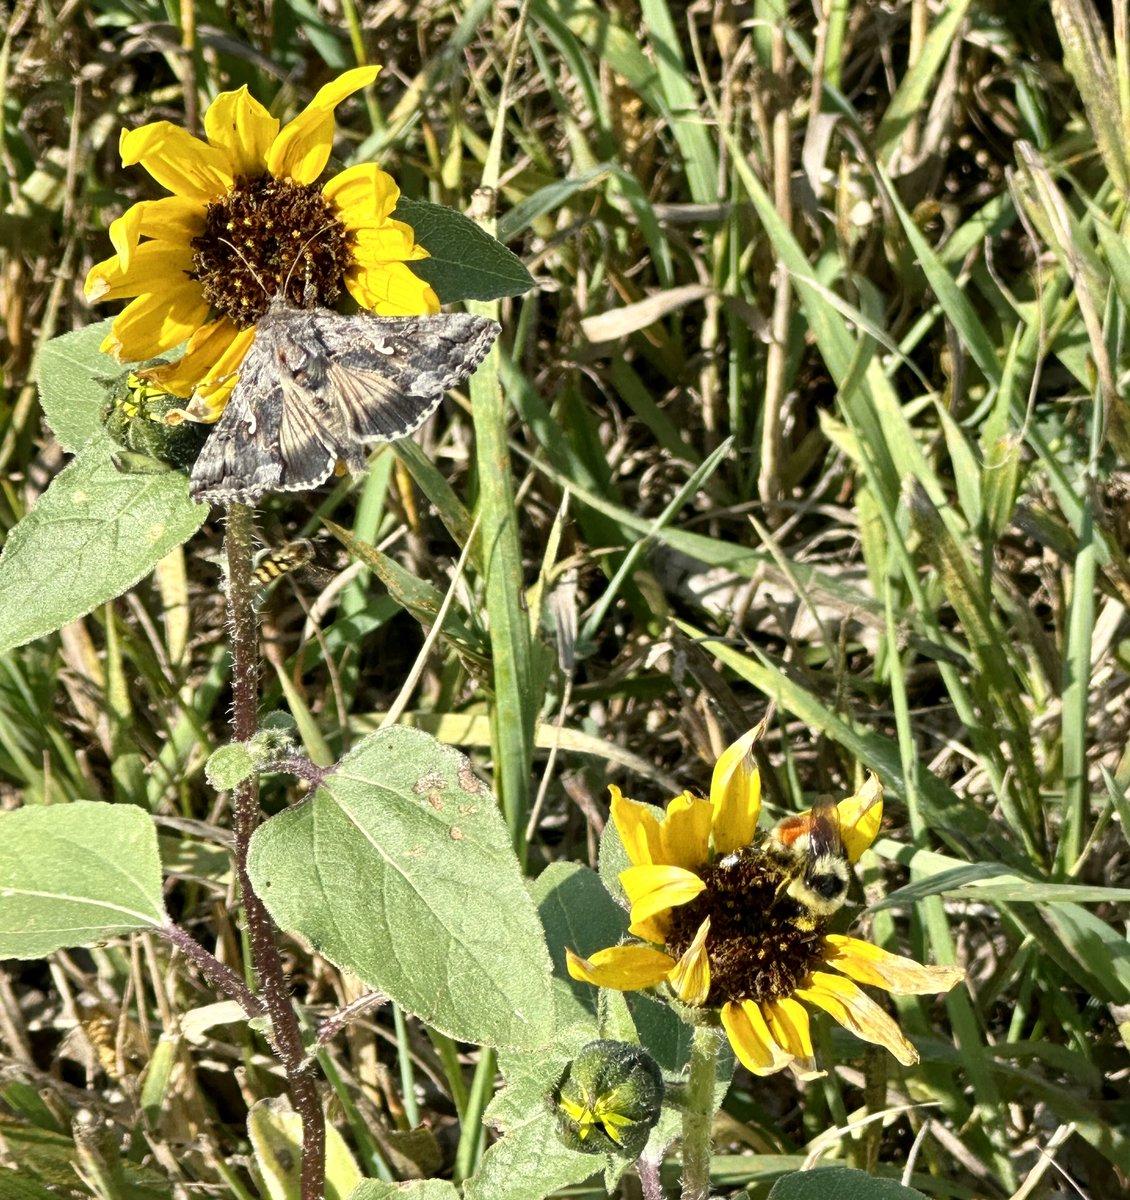 Prairie sunflowers were busy at the end of their season #blackeyedsusan